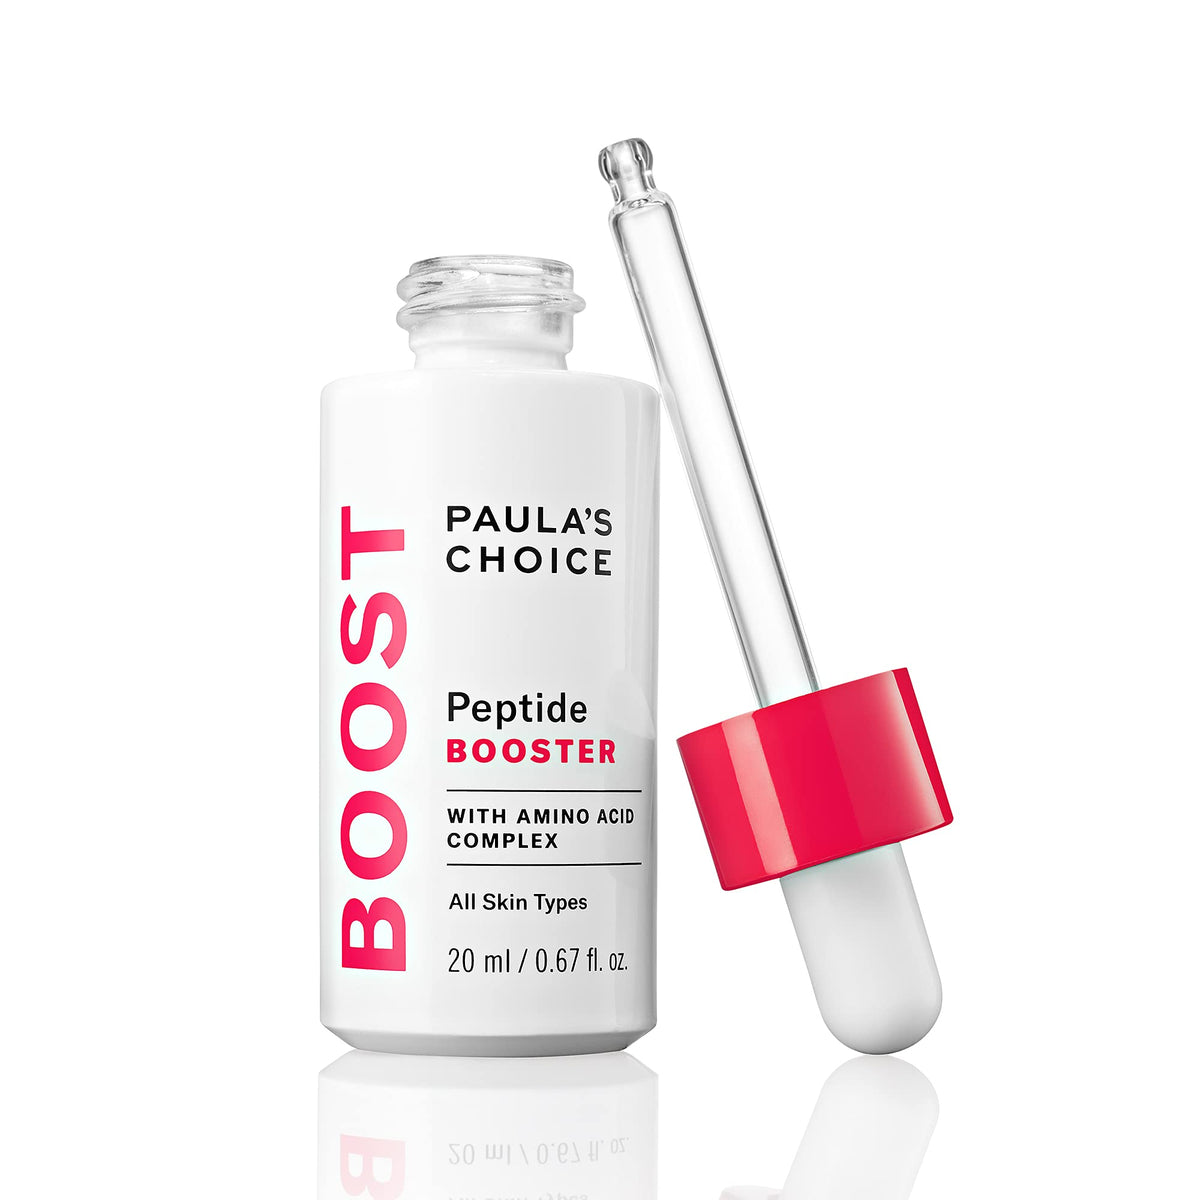 Paula's Choice Peptide Booster with Amino Acid Complex | Makeupstash Pakistan. Paula's Choice